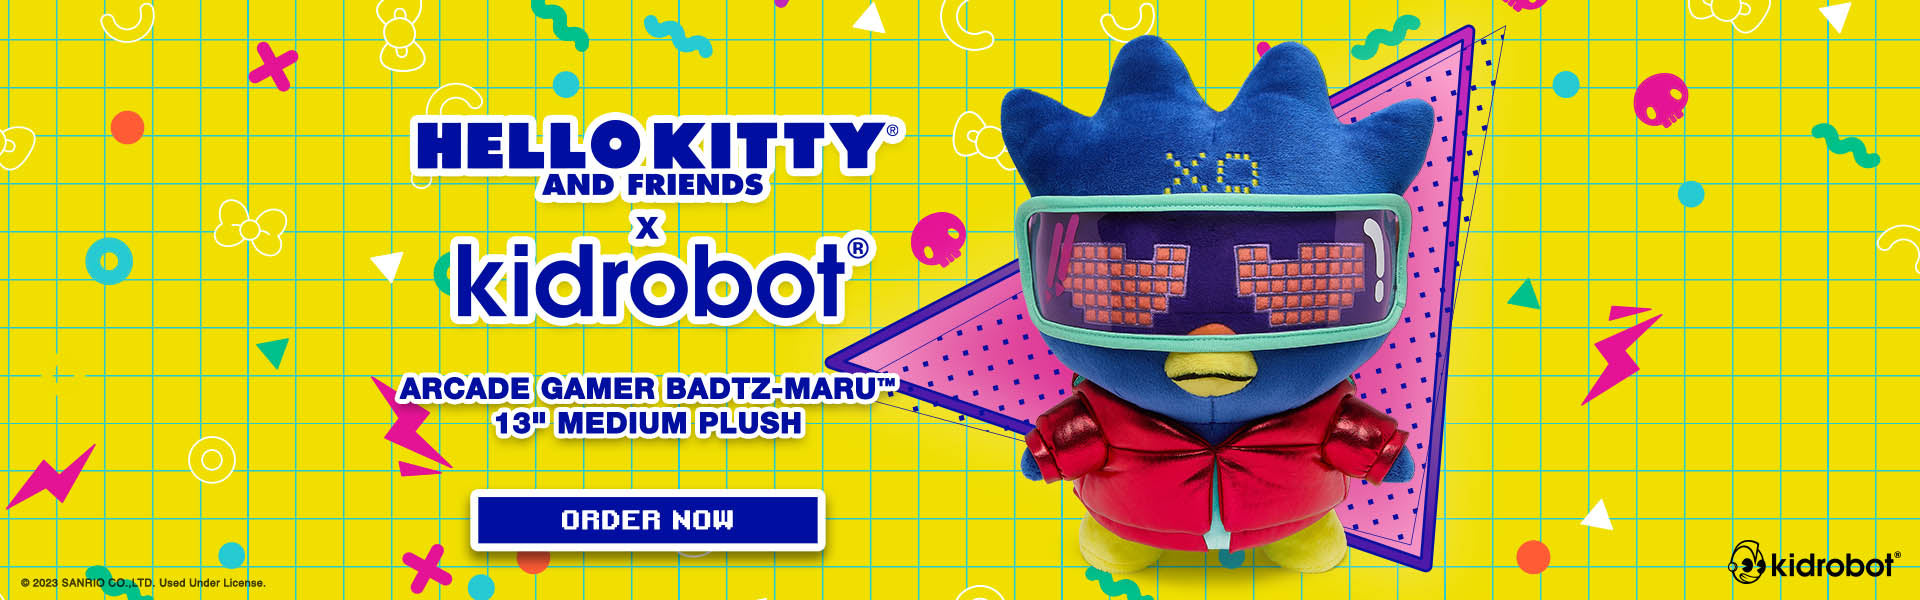 Hello Kitty® and Friends Arcade Gamer Badtz-Maru 13" Plush by Kidrobot